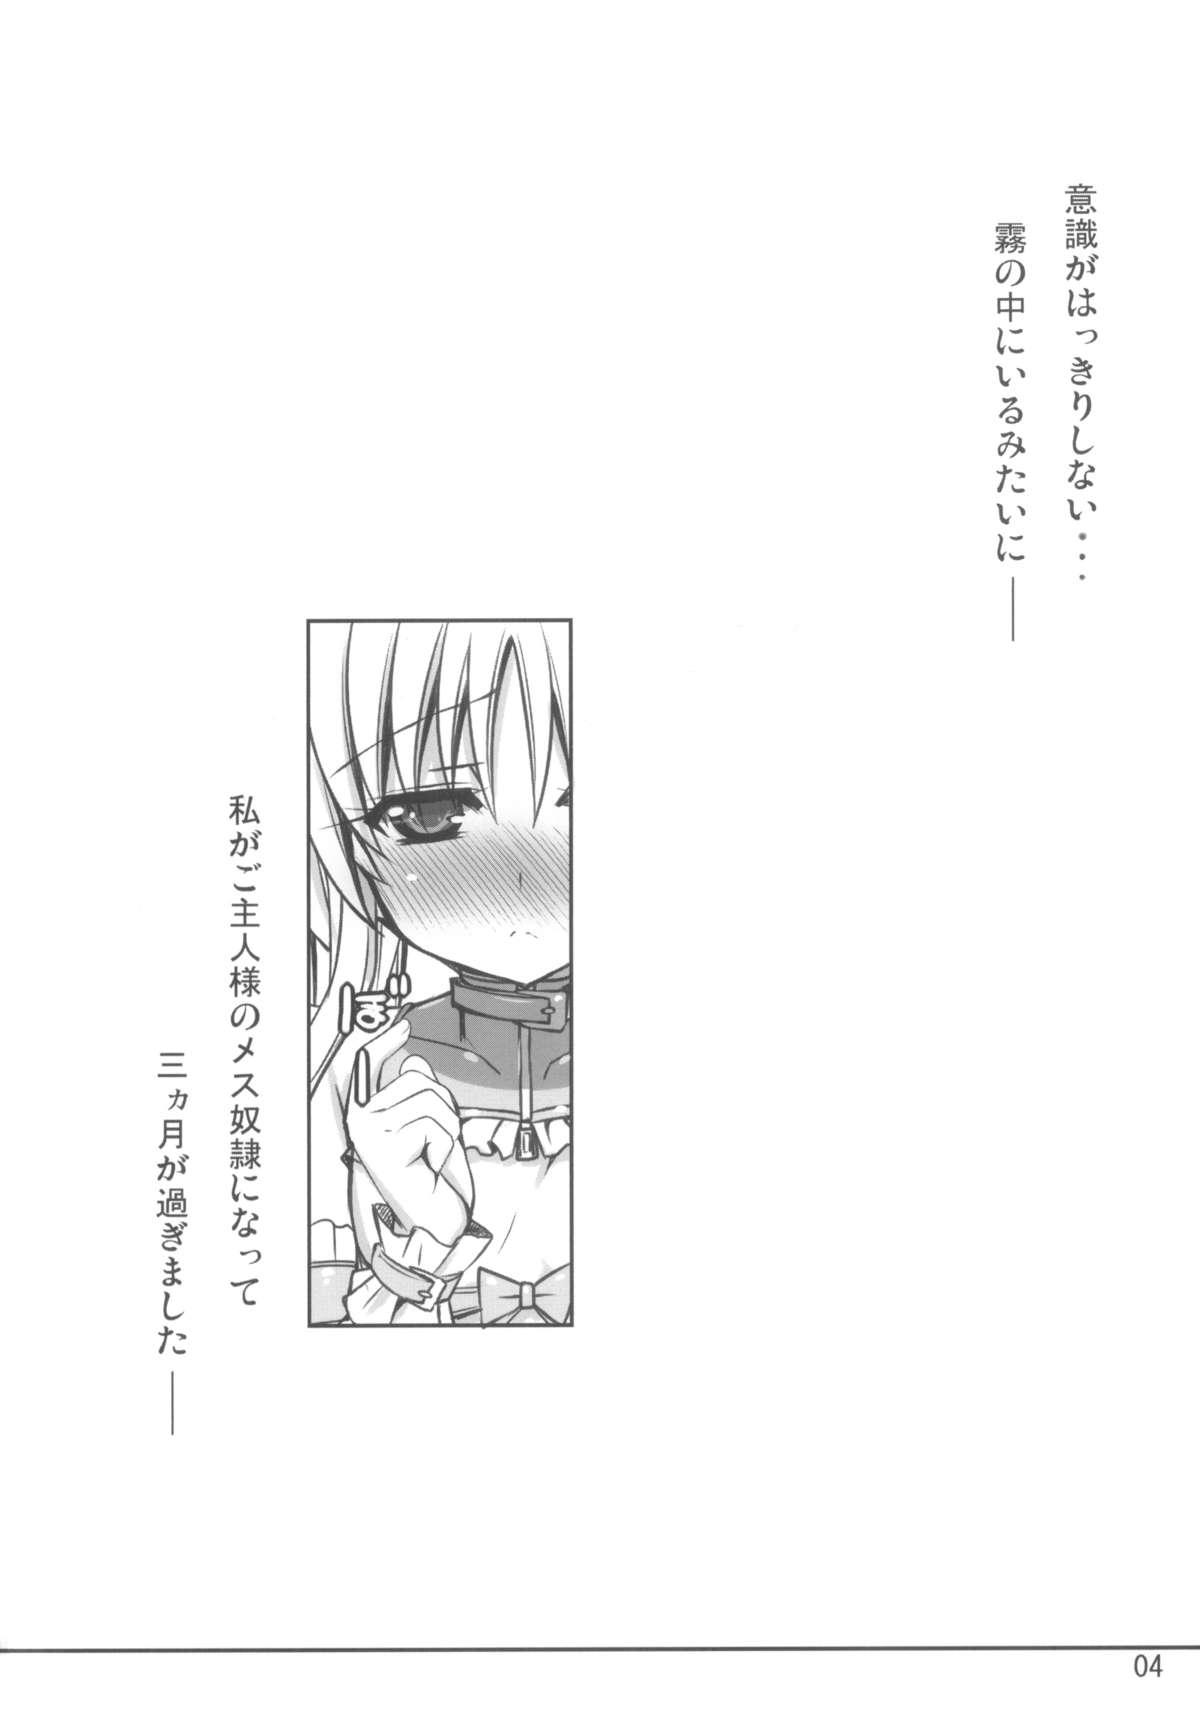 Caught 90 Days Later Ver1.00 - Mahou shoujo lyrical nanoha Classic - Page 4